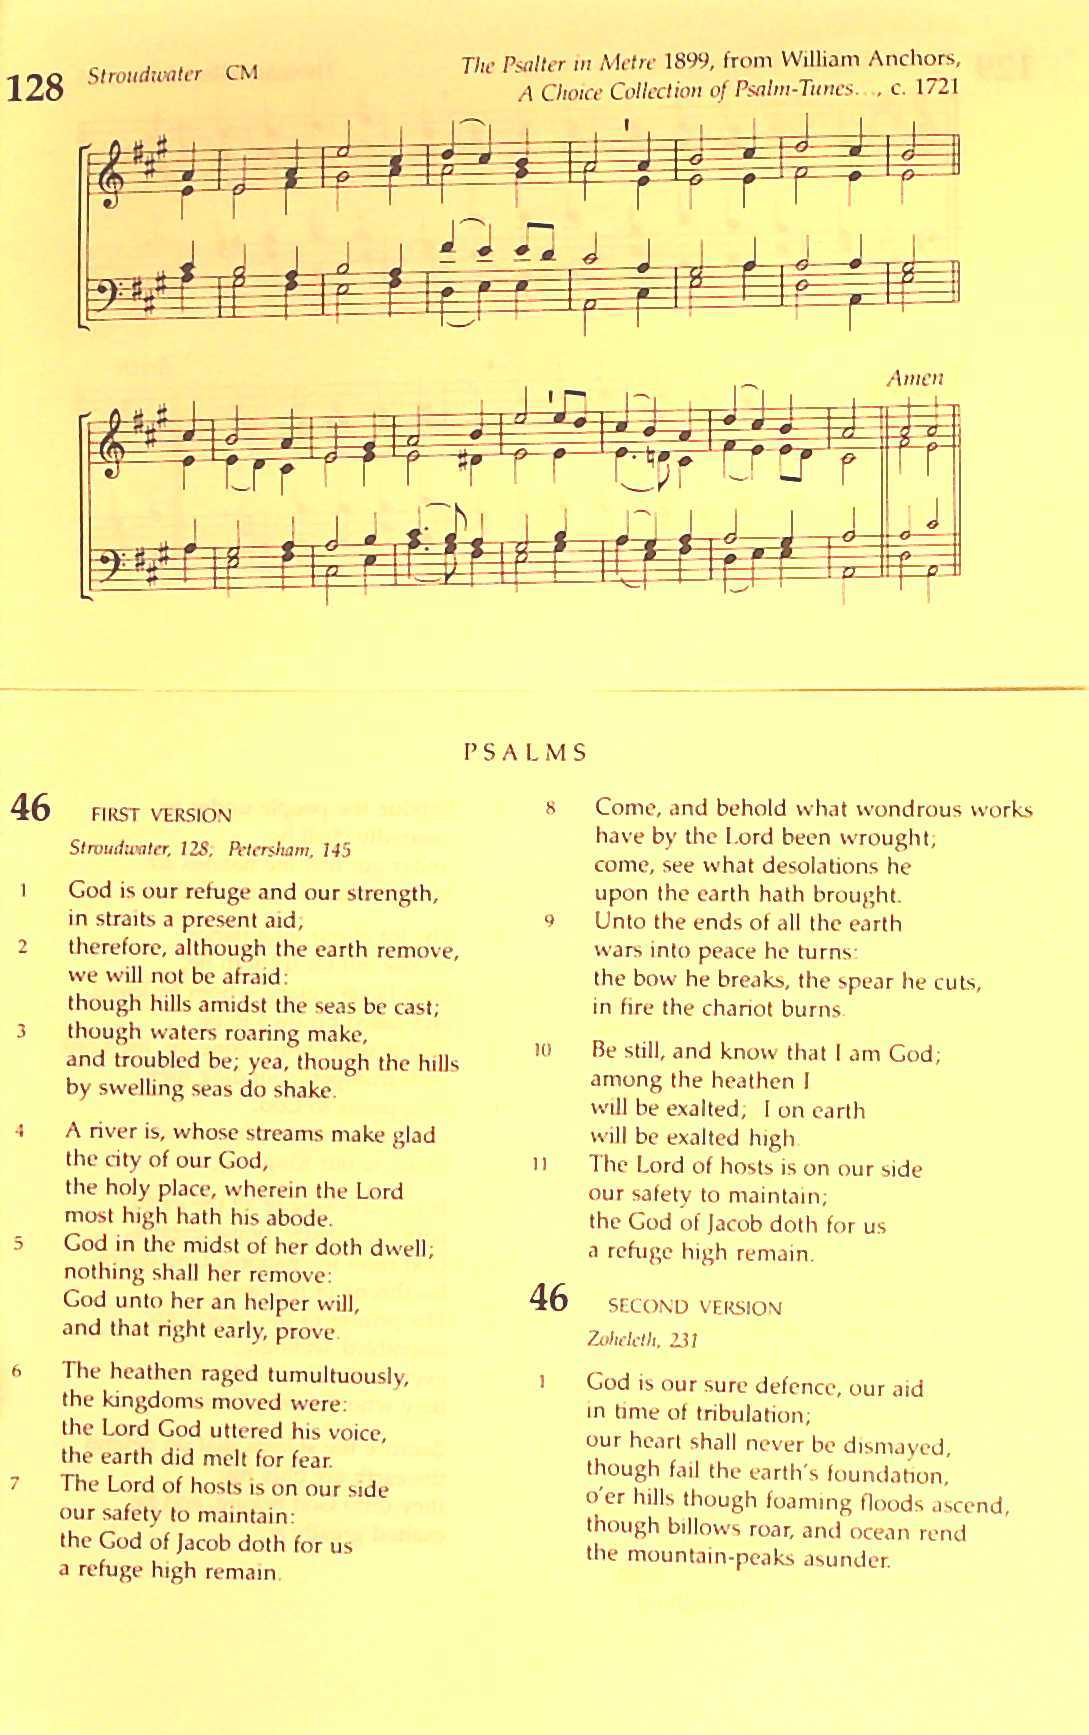 The Irish Presbyterian Hymbook page 171